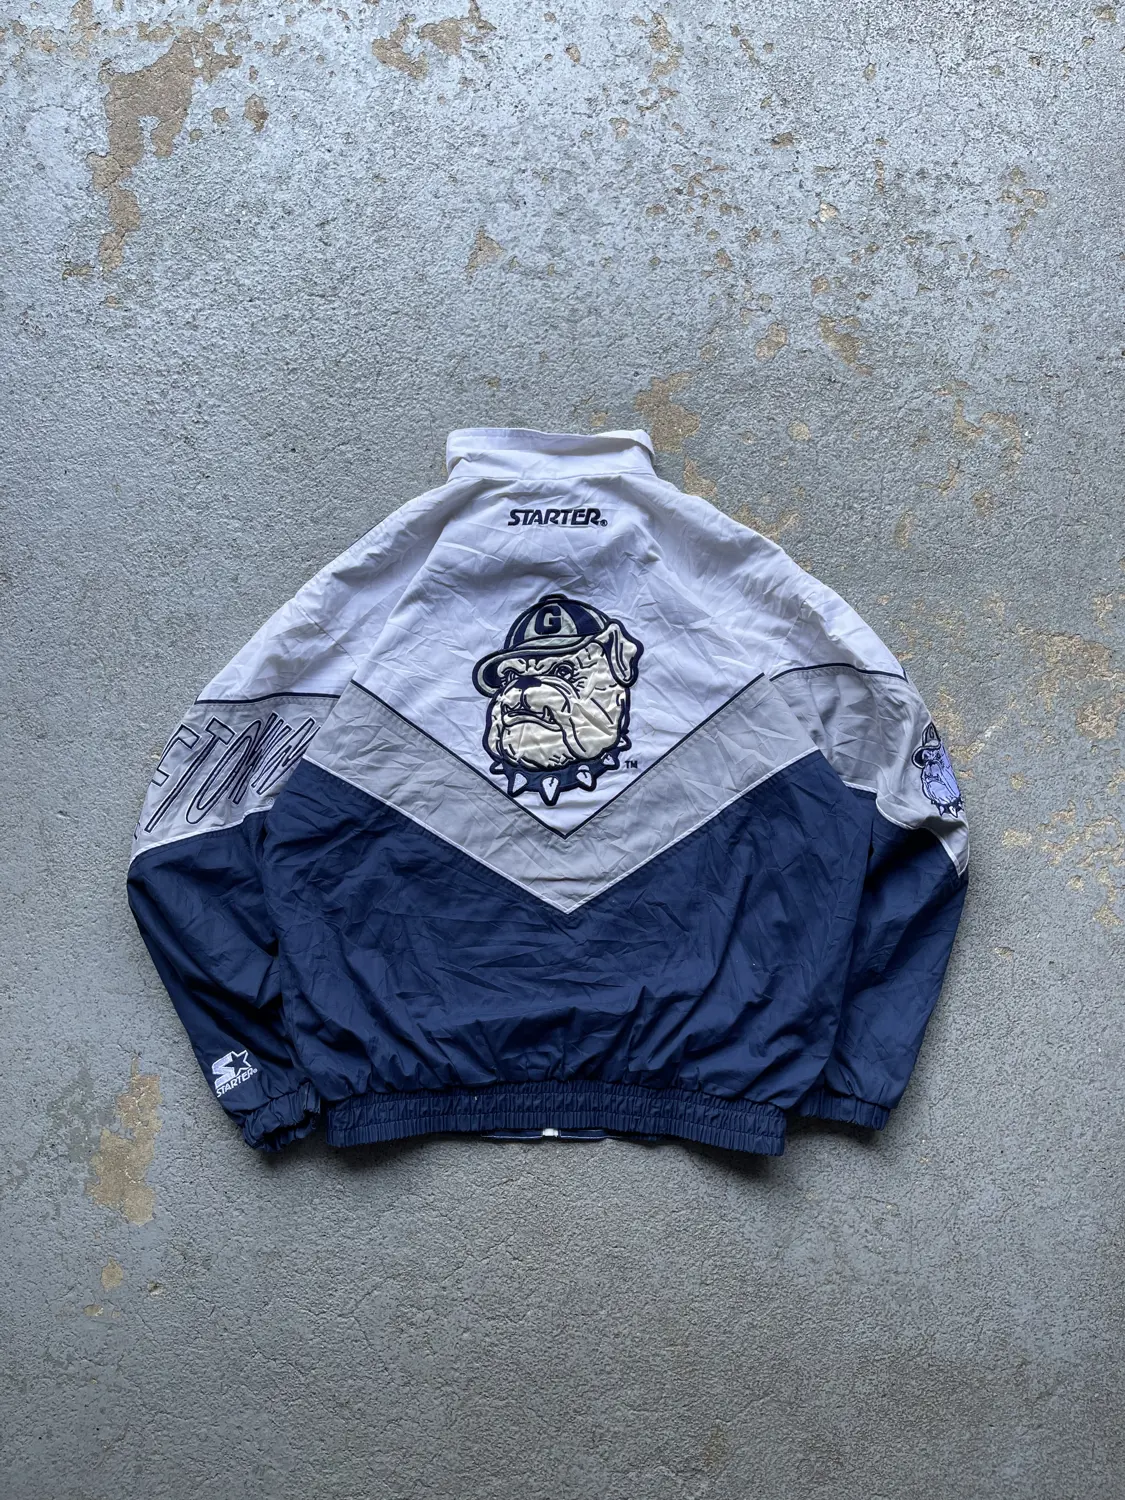 Vintage Georgetown Starter Jacket